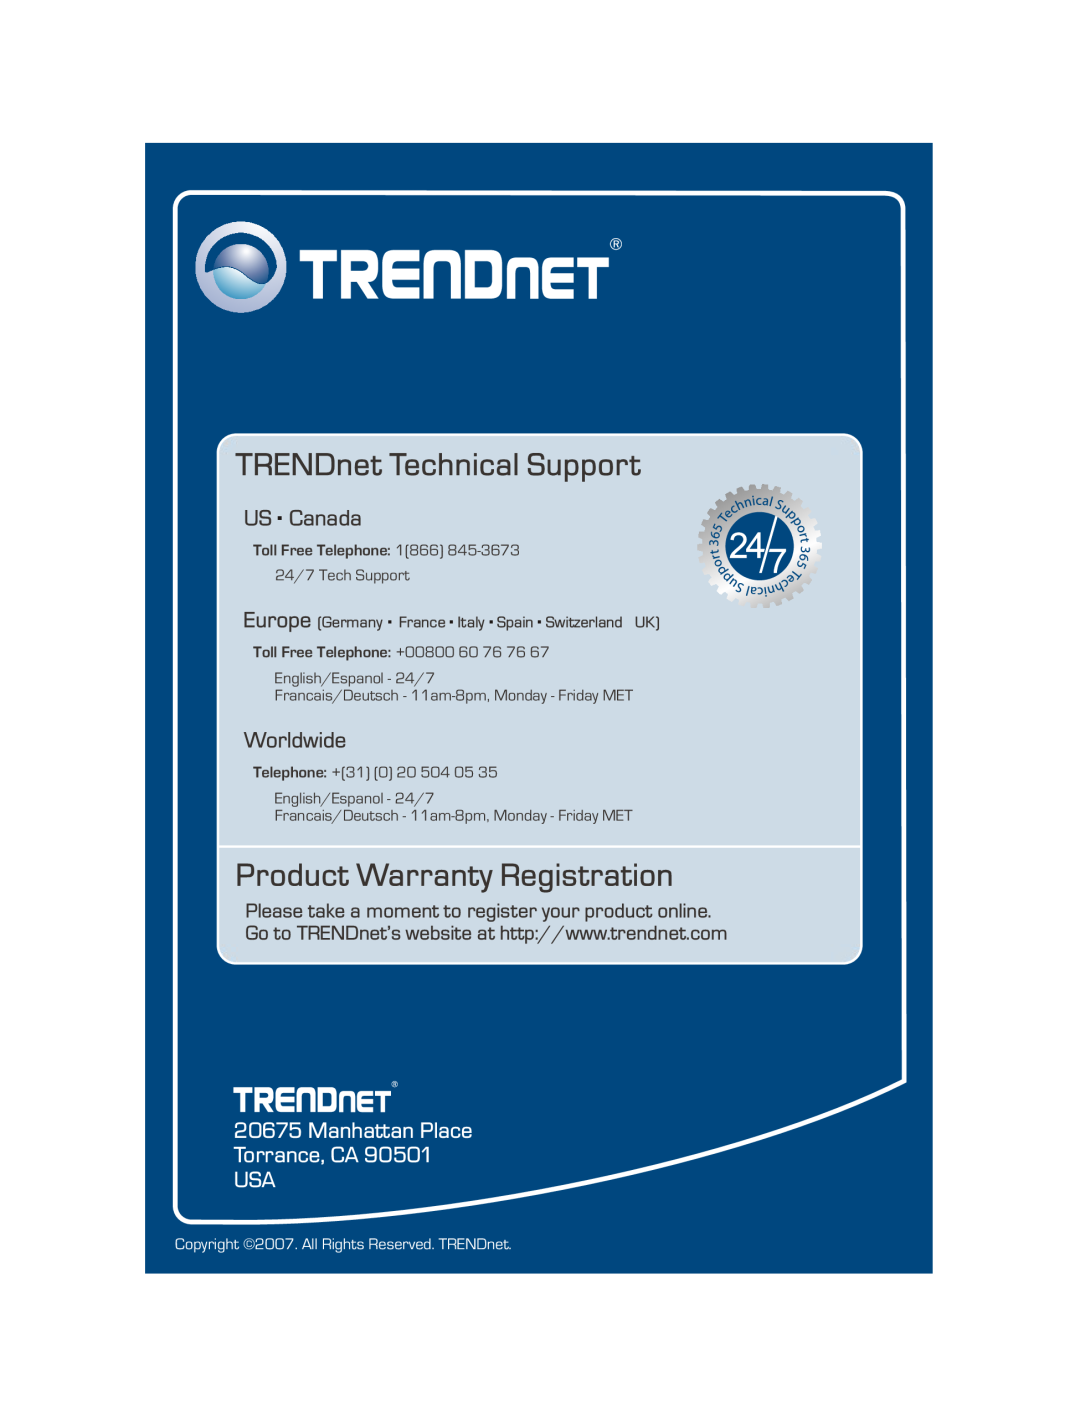 TRENDnet TK-209K, TK-409K Manhattan Place Torrance, CA USA, TRENDnet Technical Support, Product Warranty Registration 